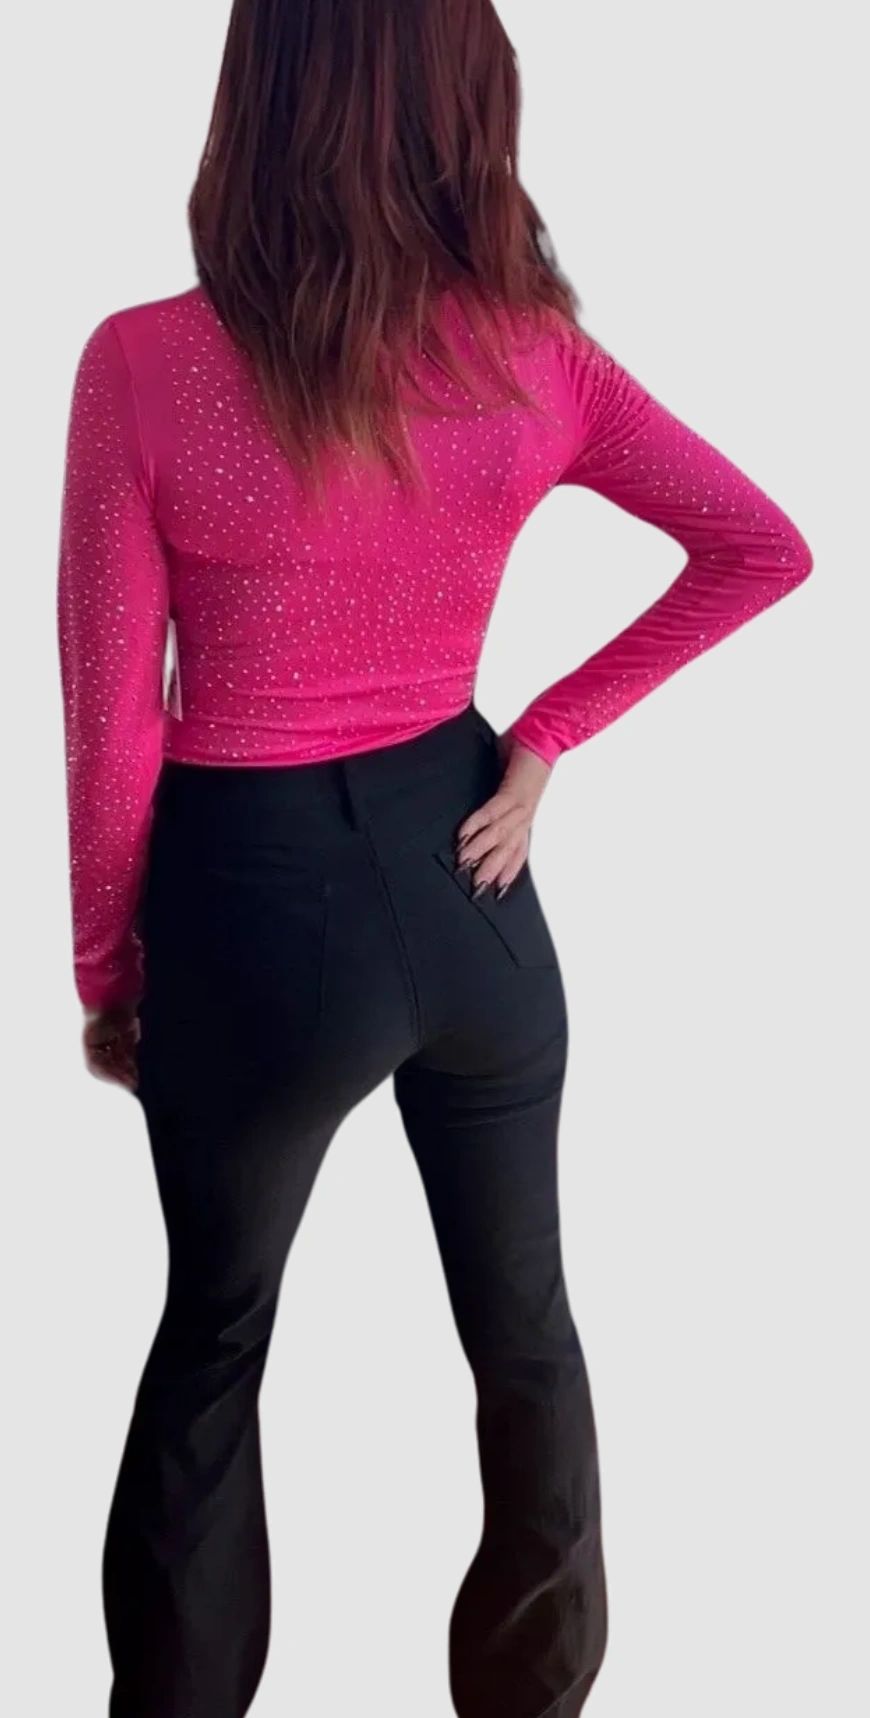 The Rosie Hot Pink Rhinestone Bodysuit, long sleeves, snap closure and scoop neck